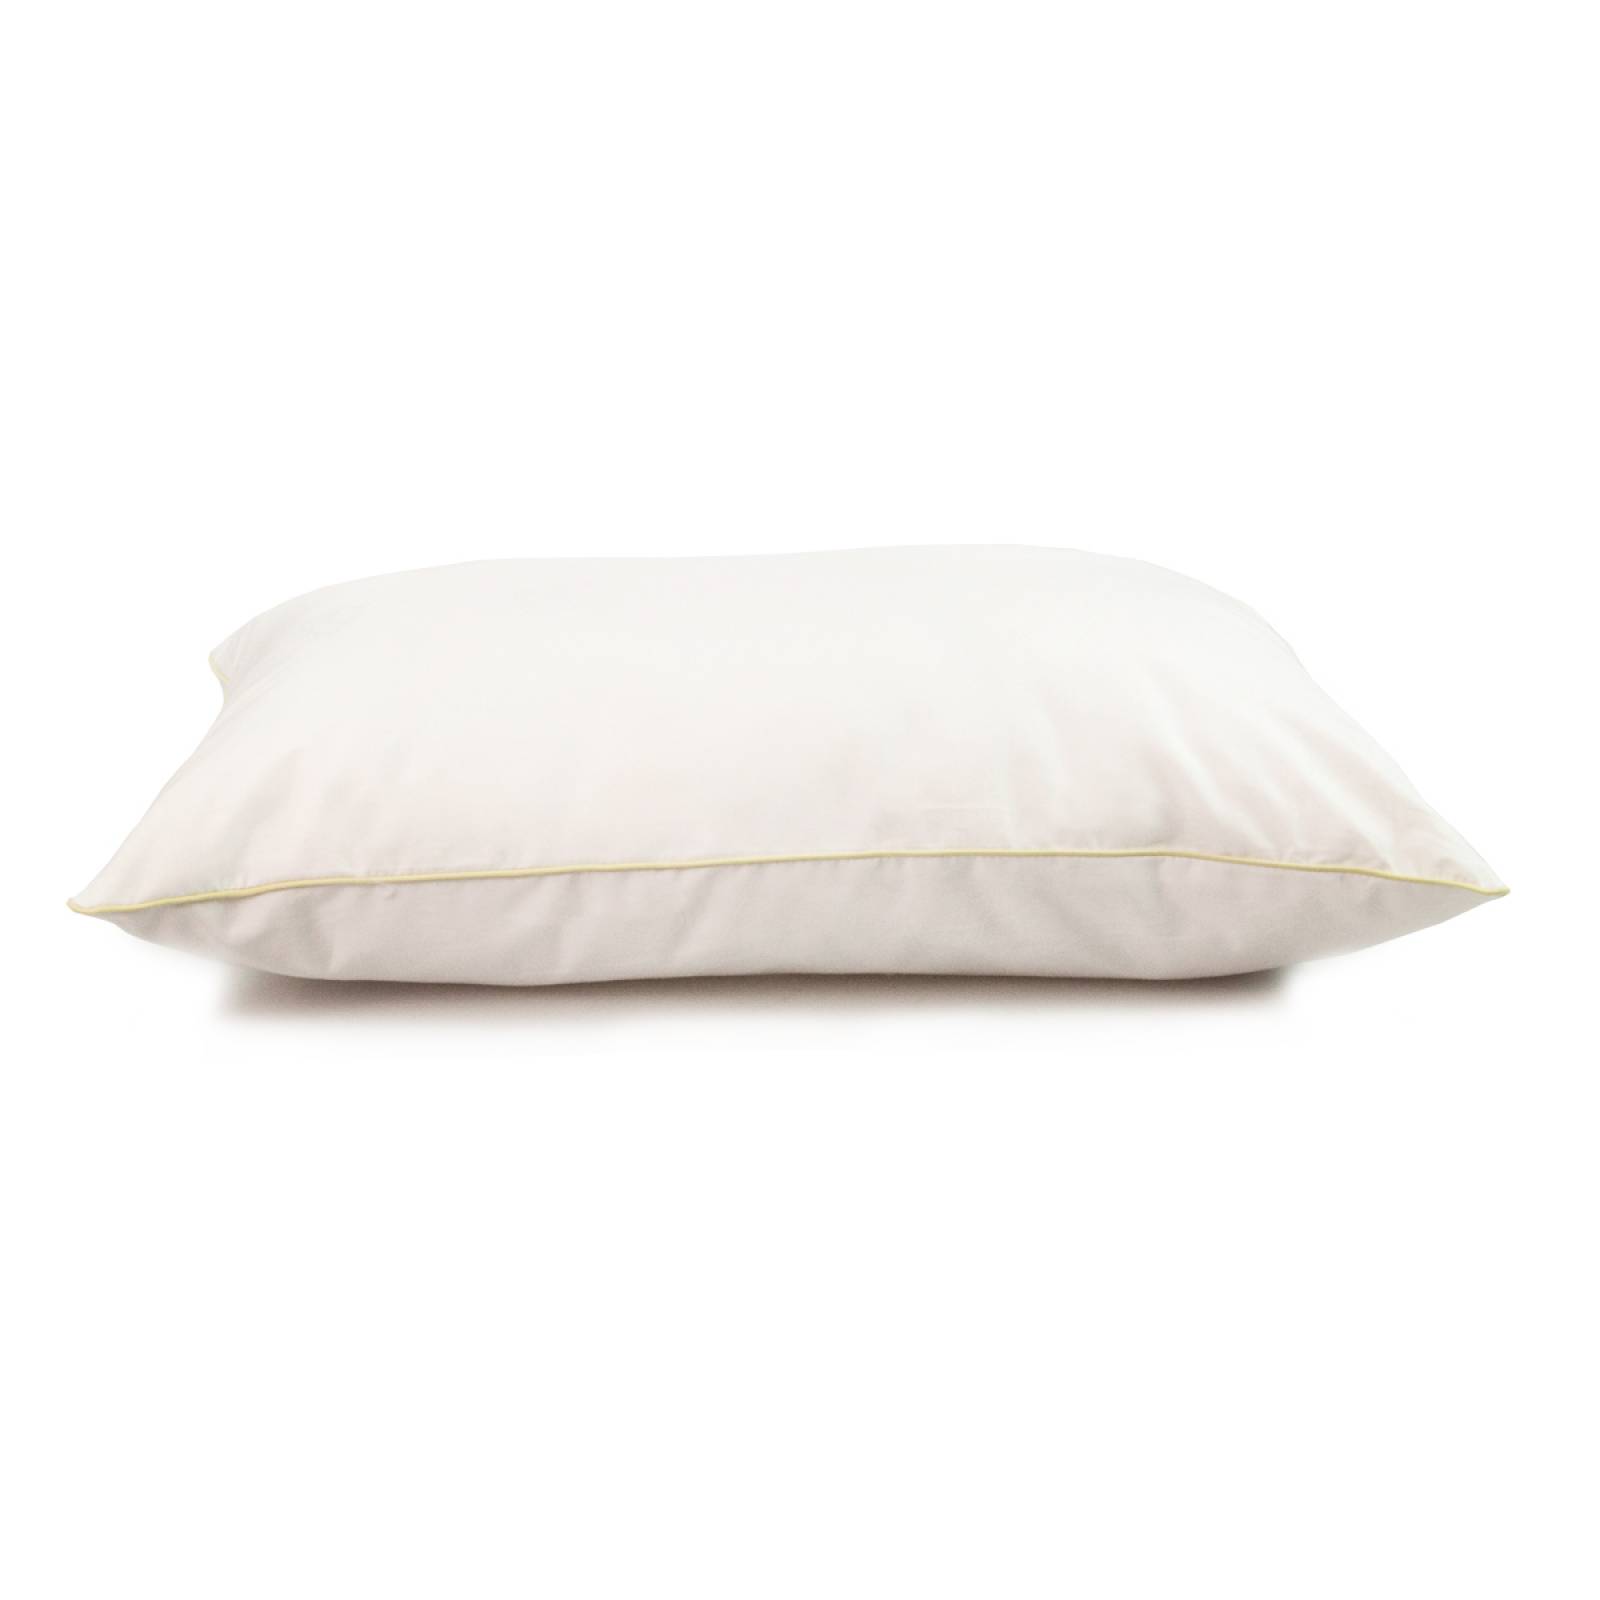 Almohada Spring Air Meditation Pillow - Suave King Size